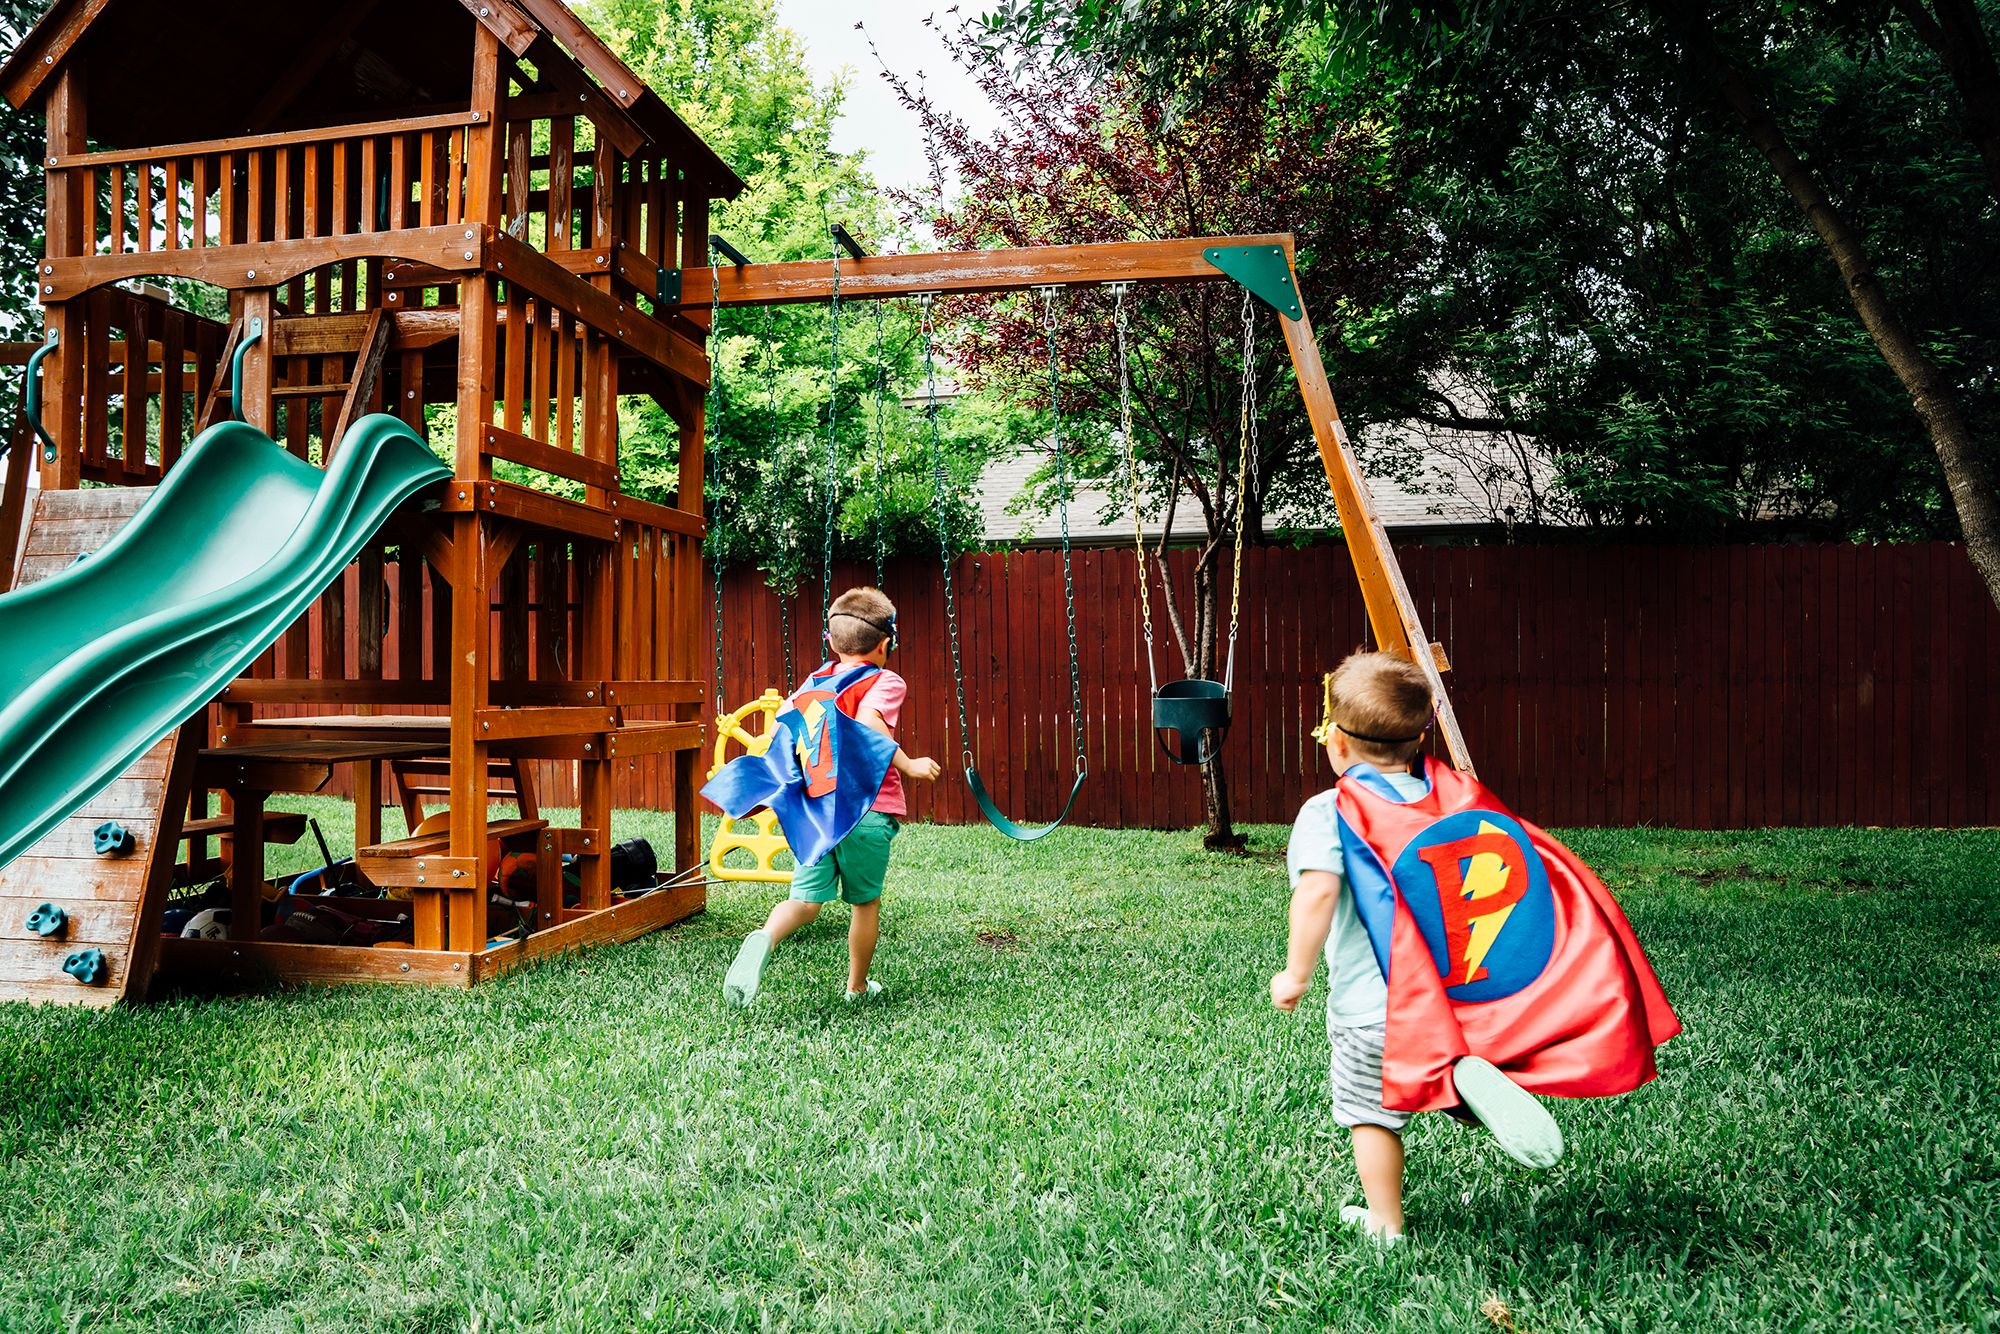 Playground In/Outdoor Toddler Swing Set Fun Play Baby Toy Child Kids Rocker USA 